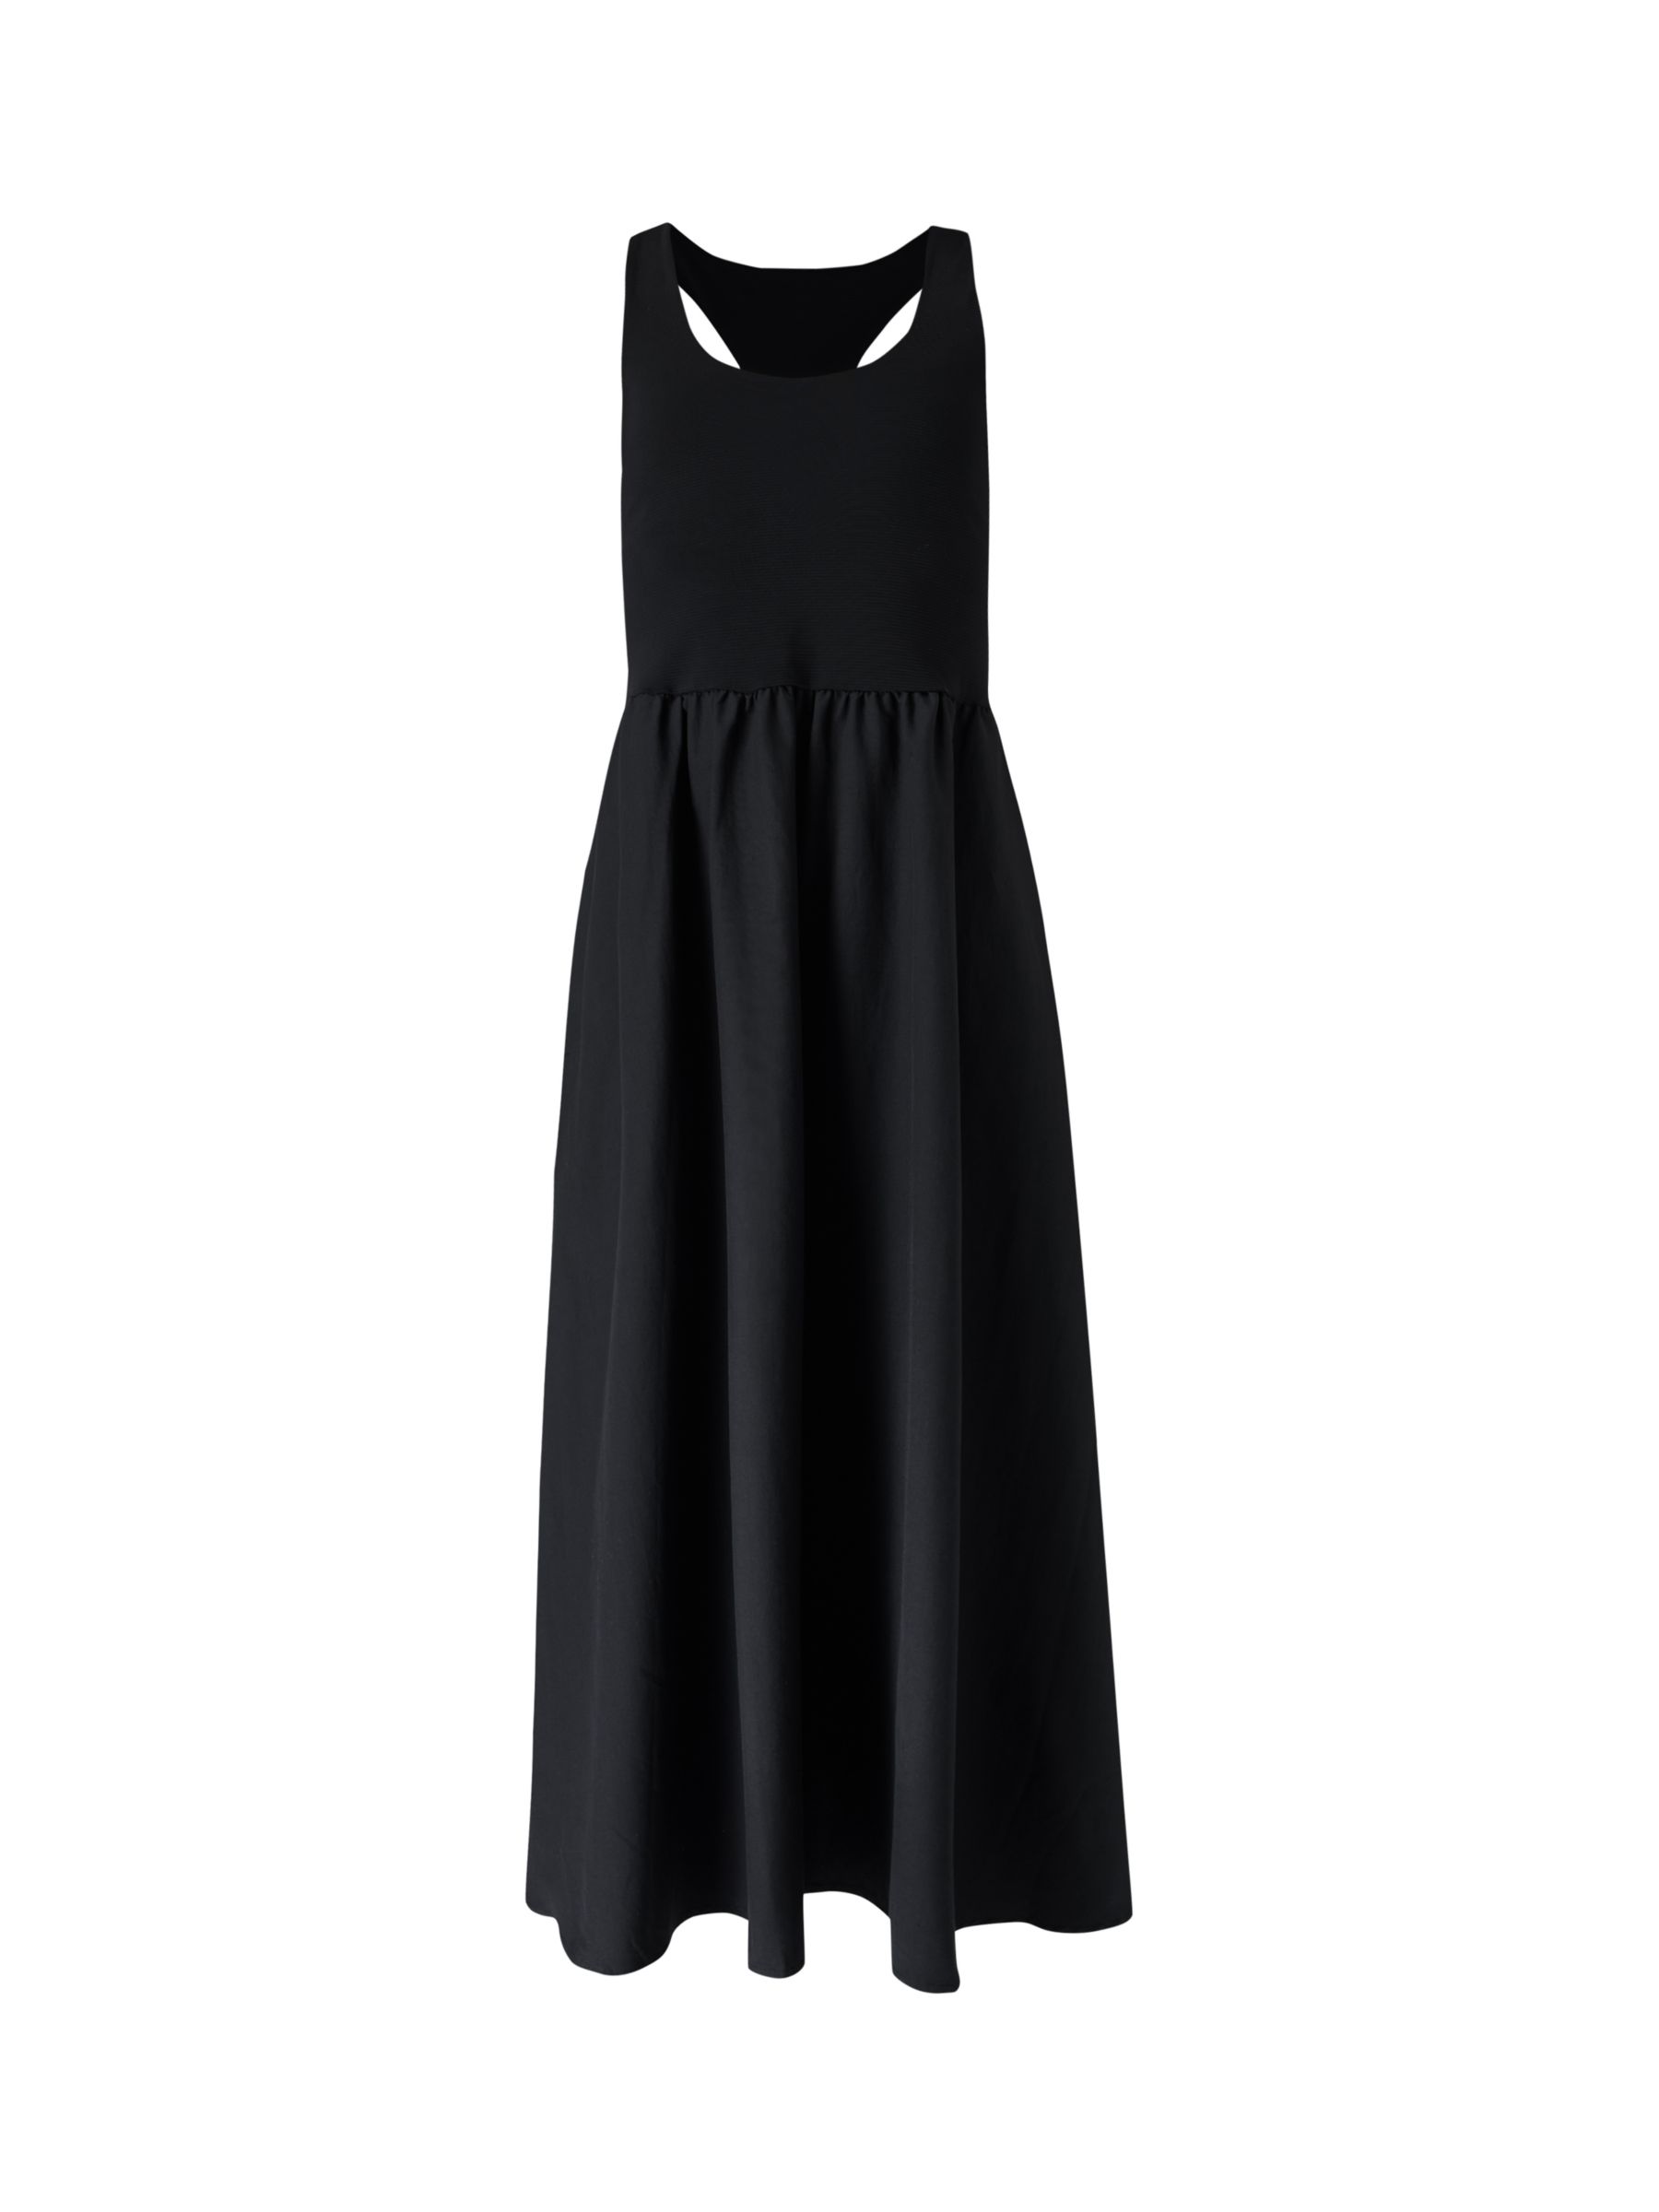 Sweaty Betty Explorer Ribbed Race Dress, Black, XXS